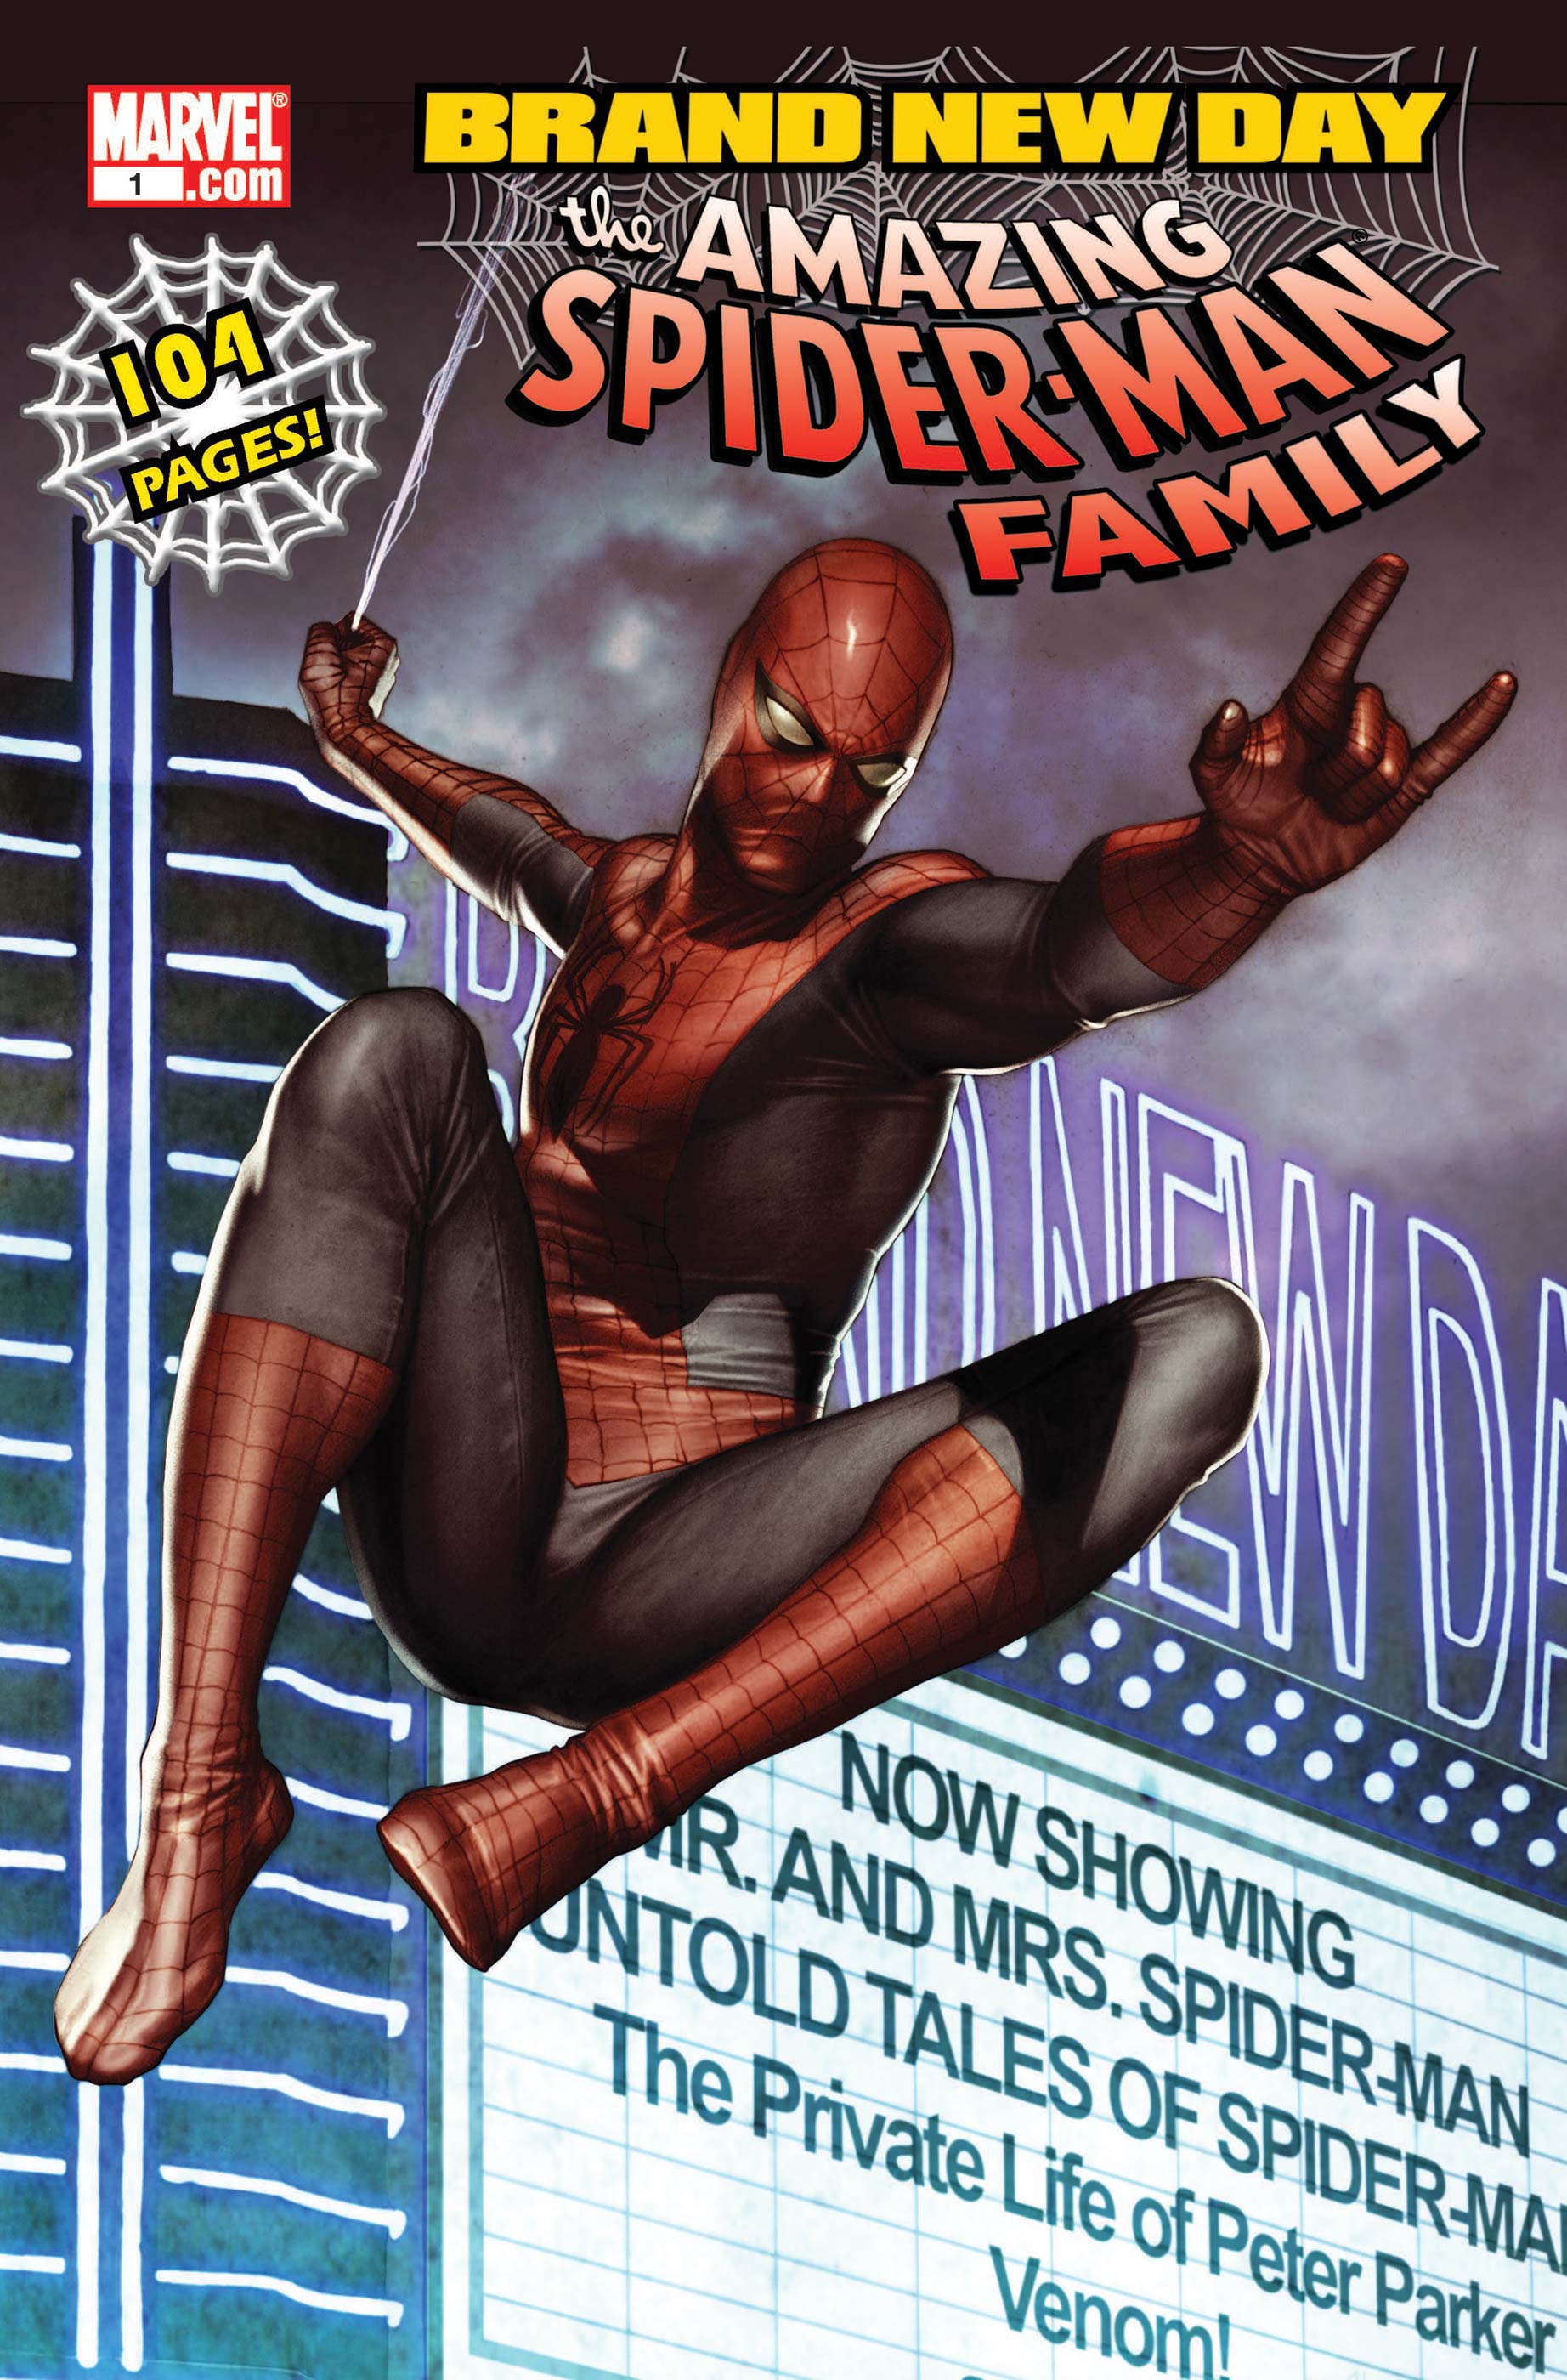 Amazing Spider-Man Family (2008) #1